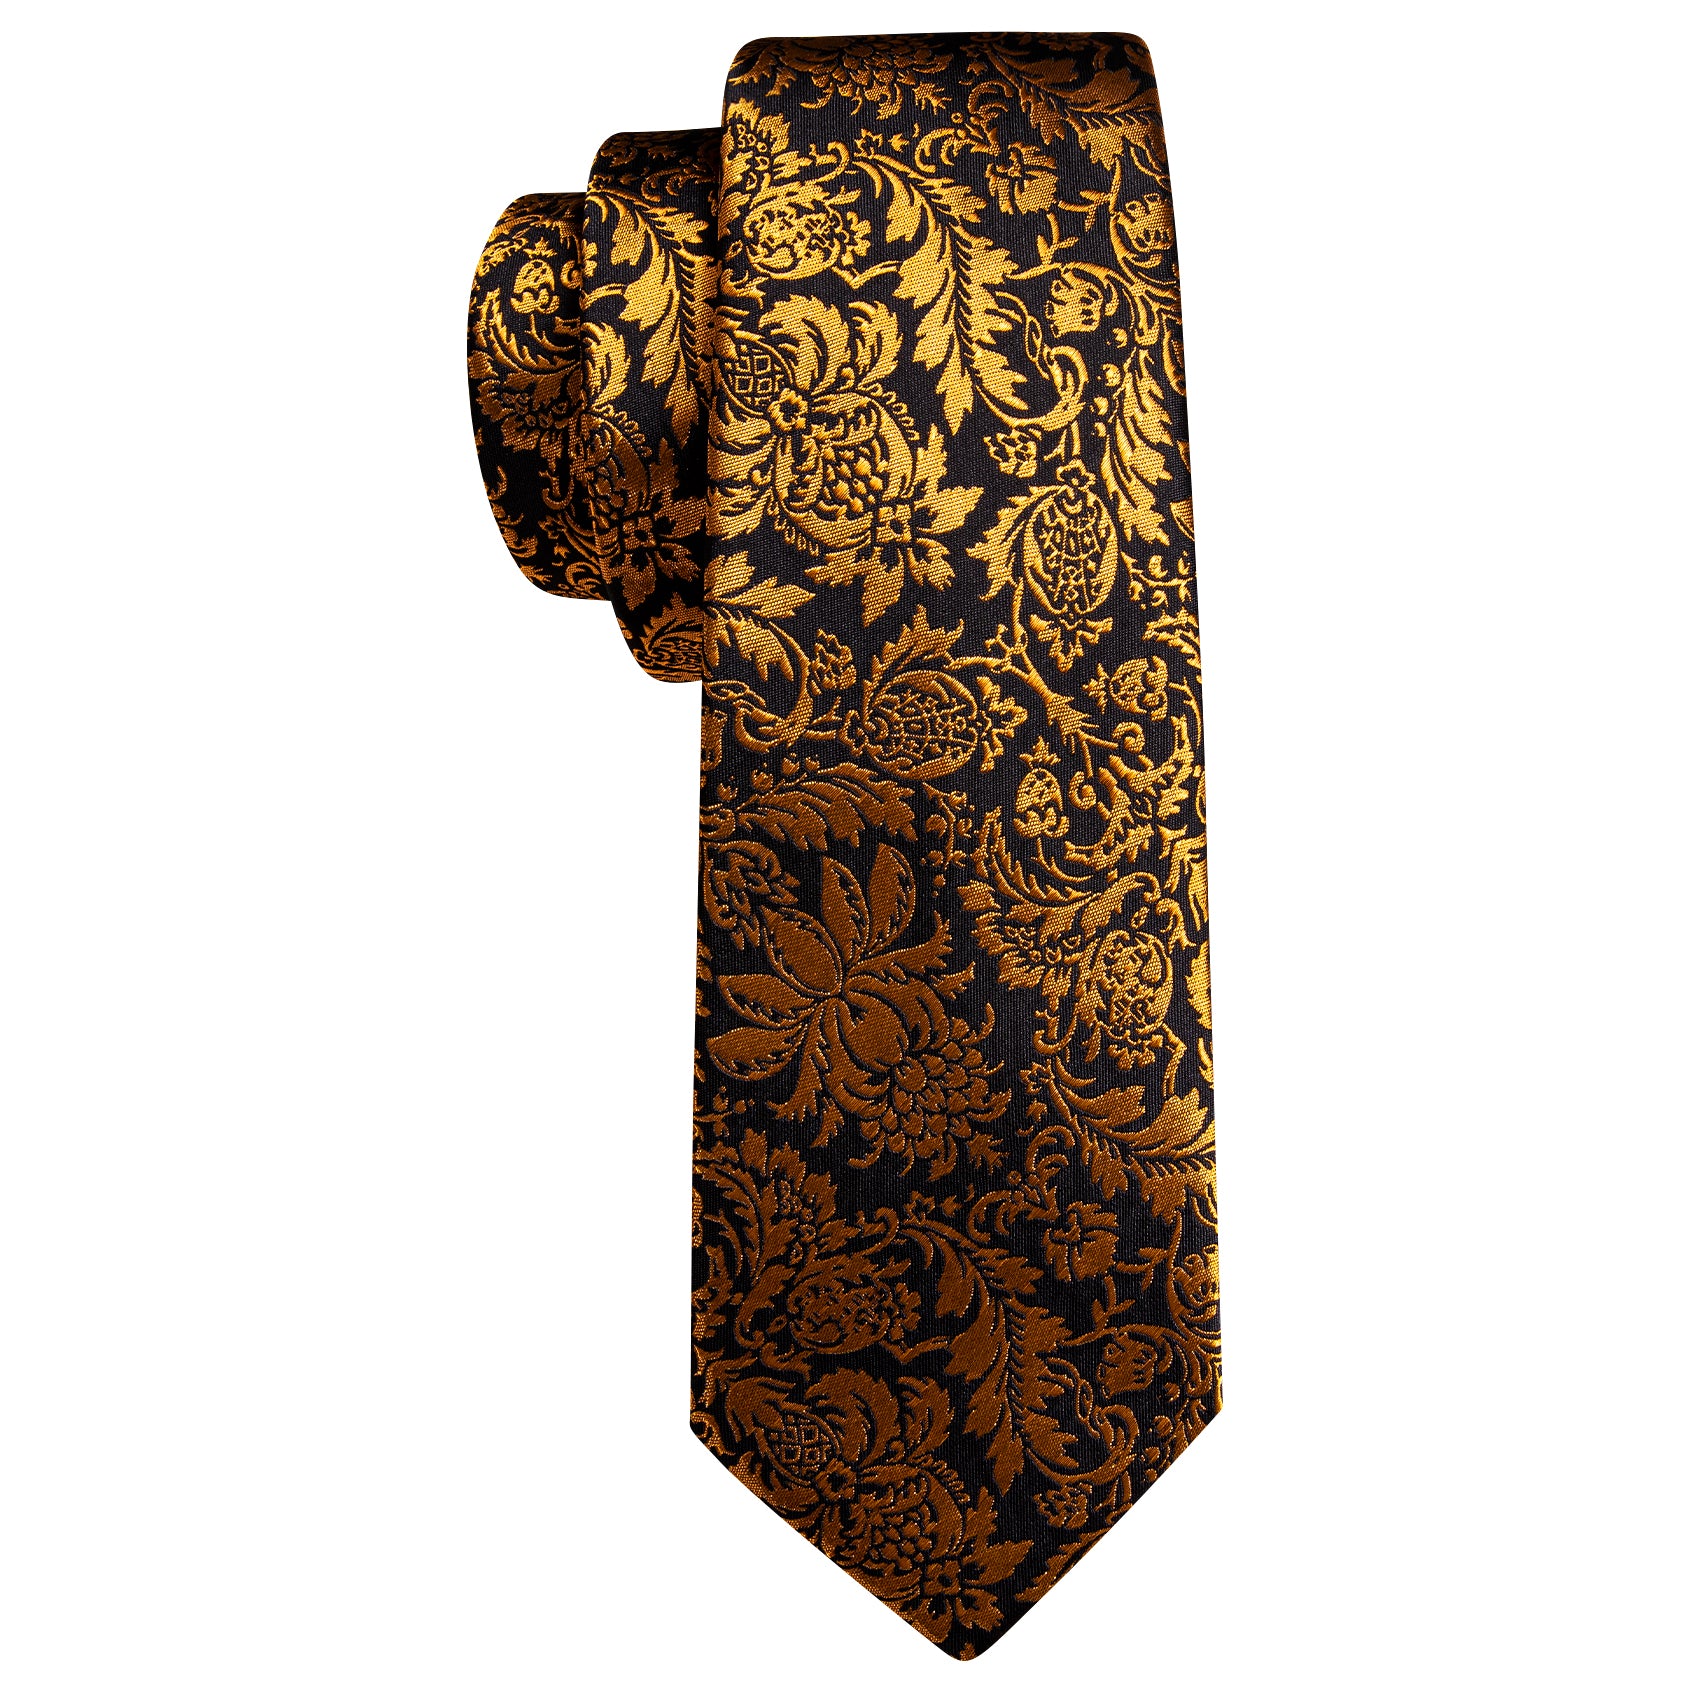 Black Gold Paisley Silk Tie Handkerchief Cufflinks Set